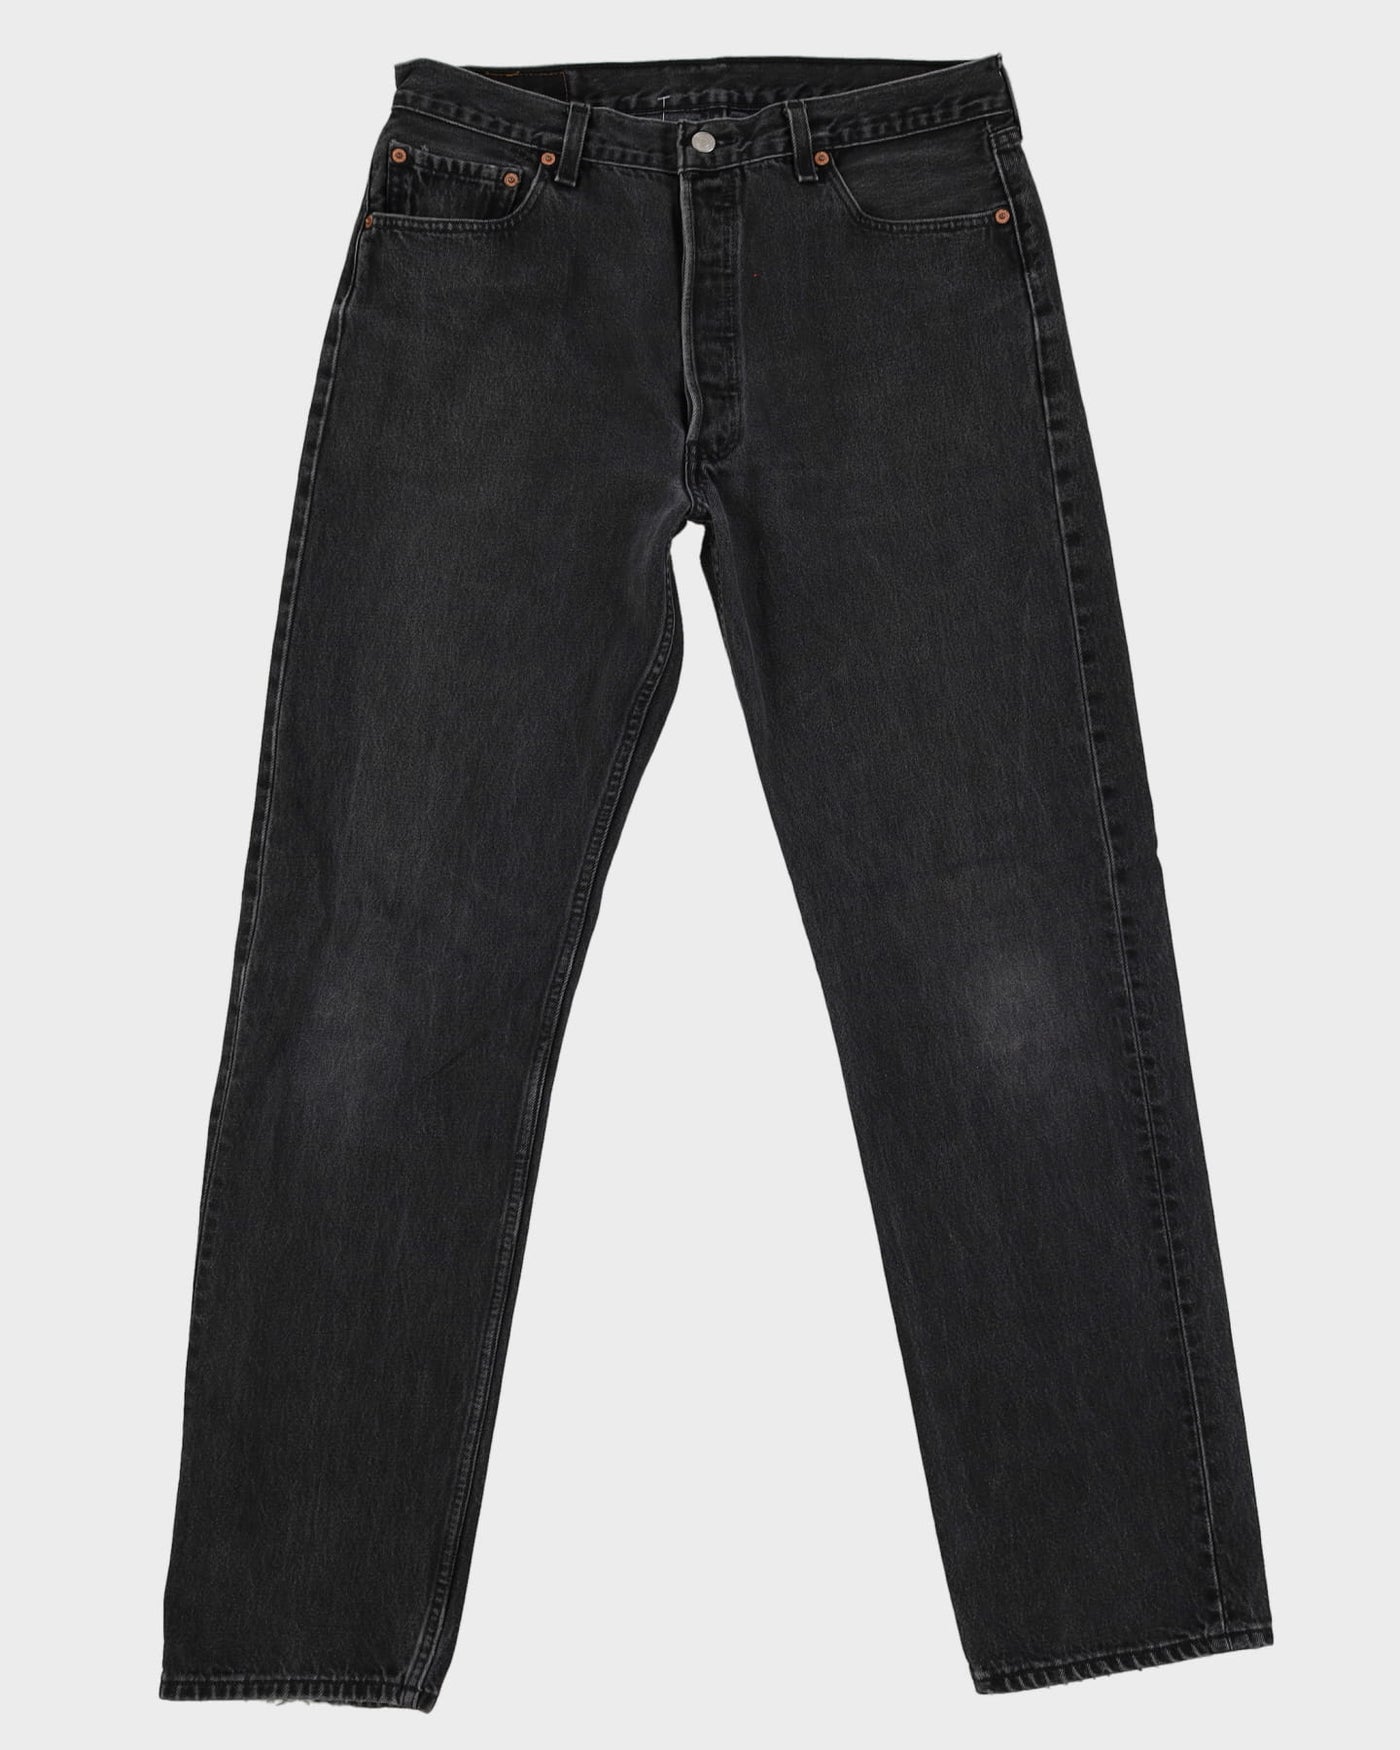 Vintage 90s Levi's 501 Dark Wash Black Jeans - W36 L34